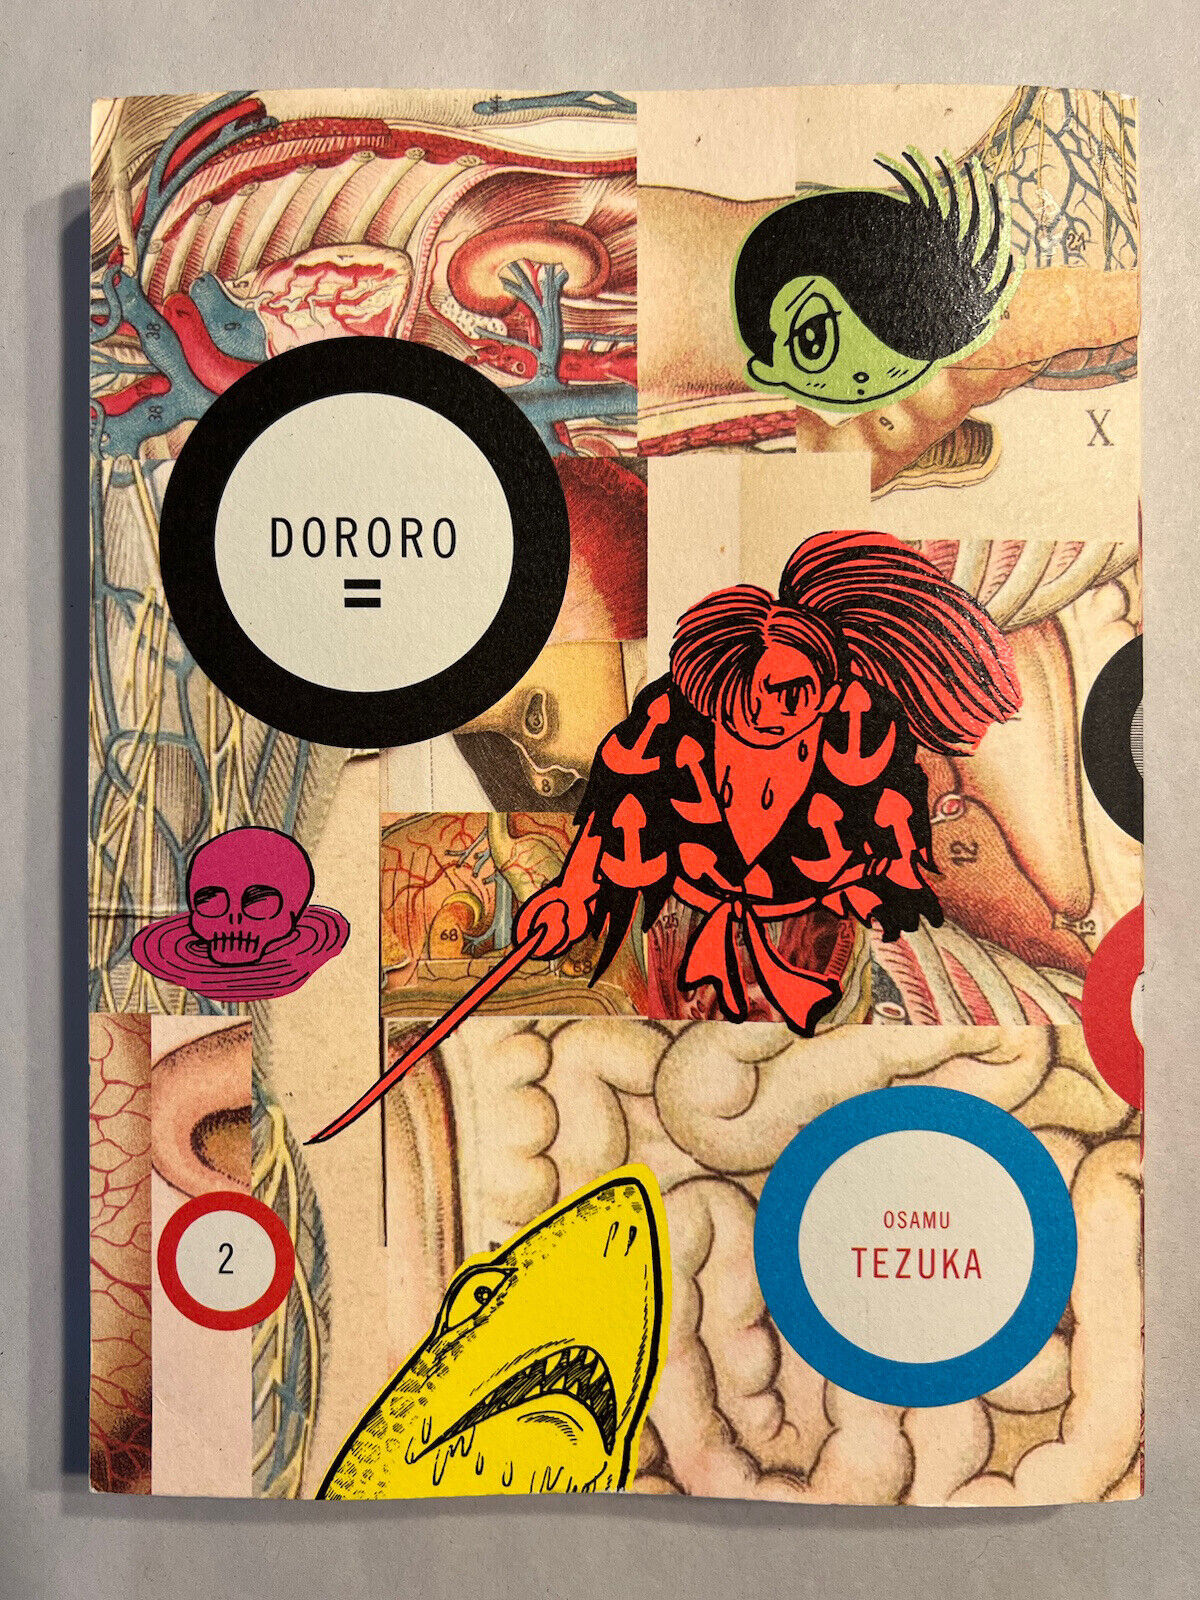 Dororo 2 Manga Graphic Novel ⚔️ Action Fantasy Osamu Tezuka